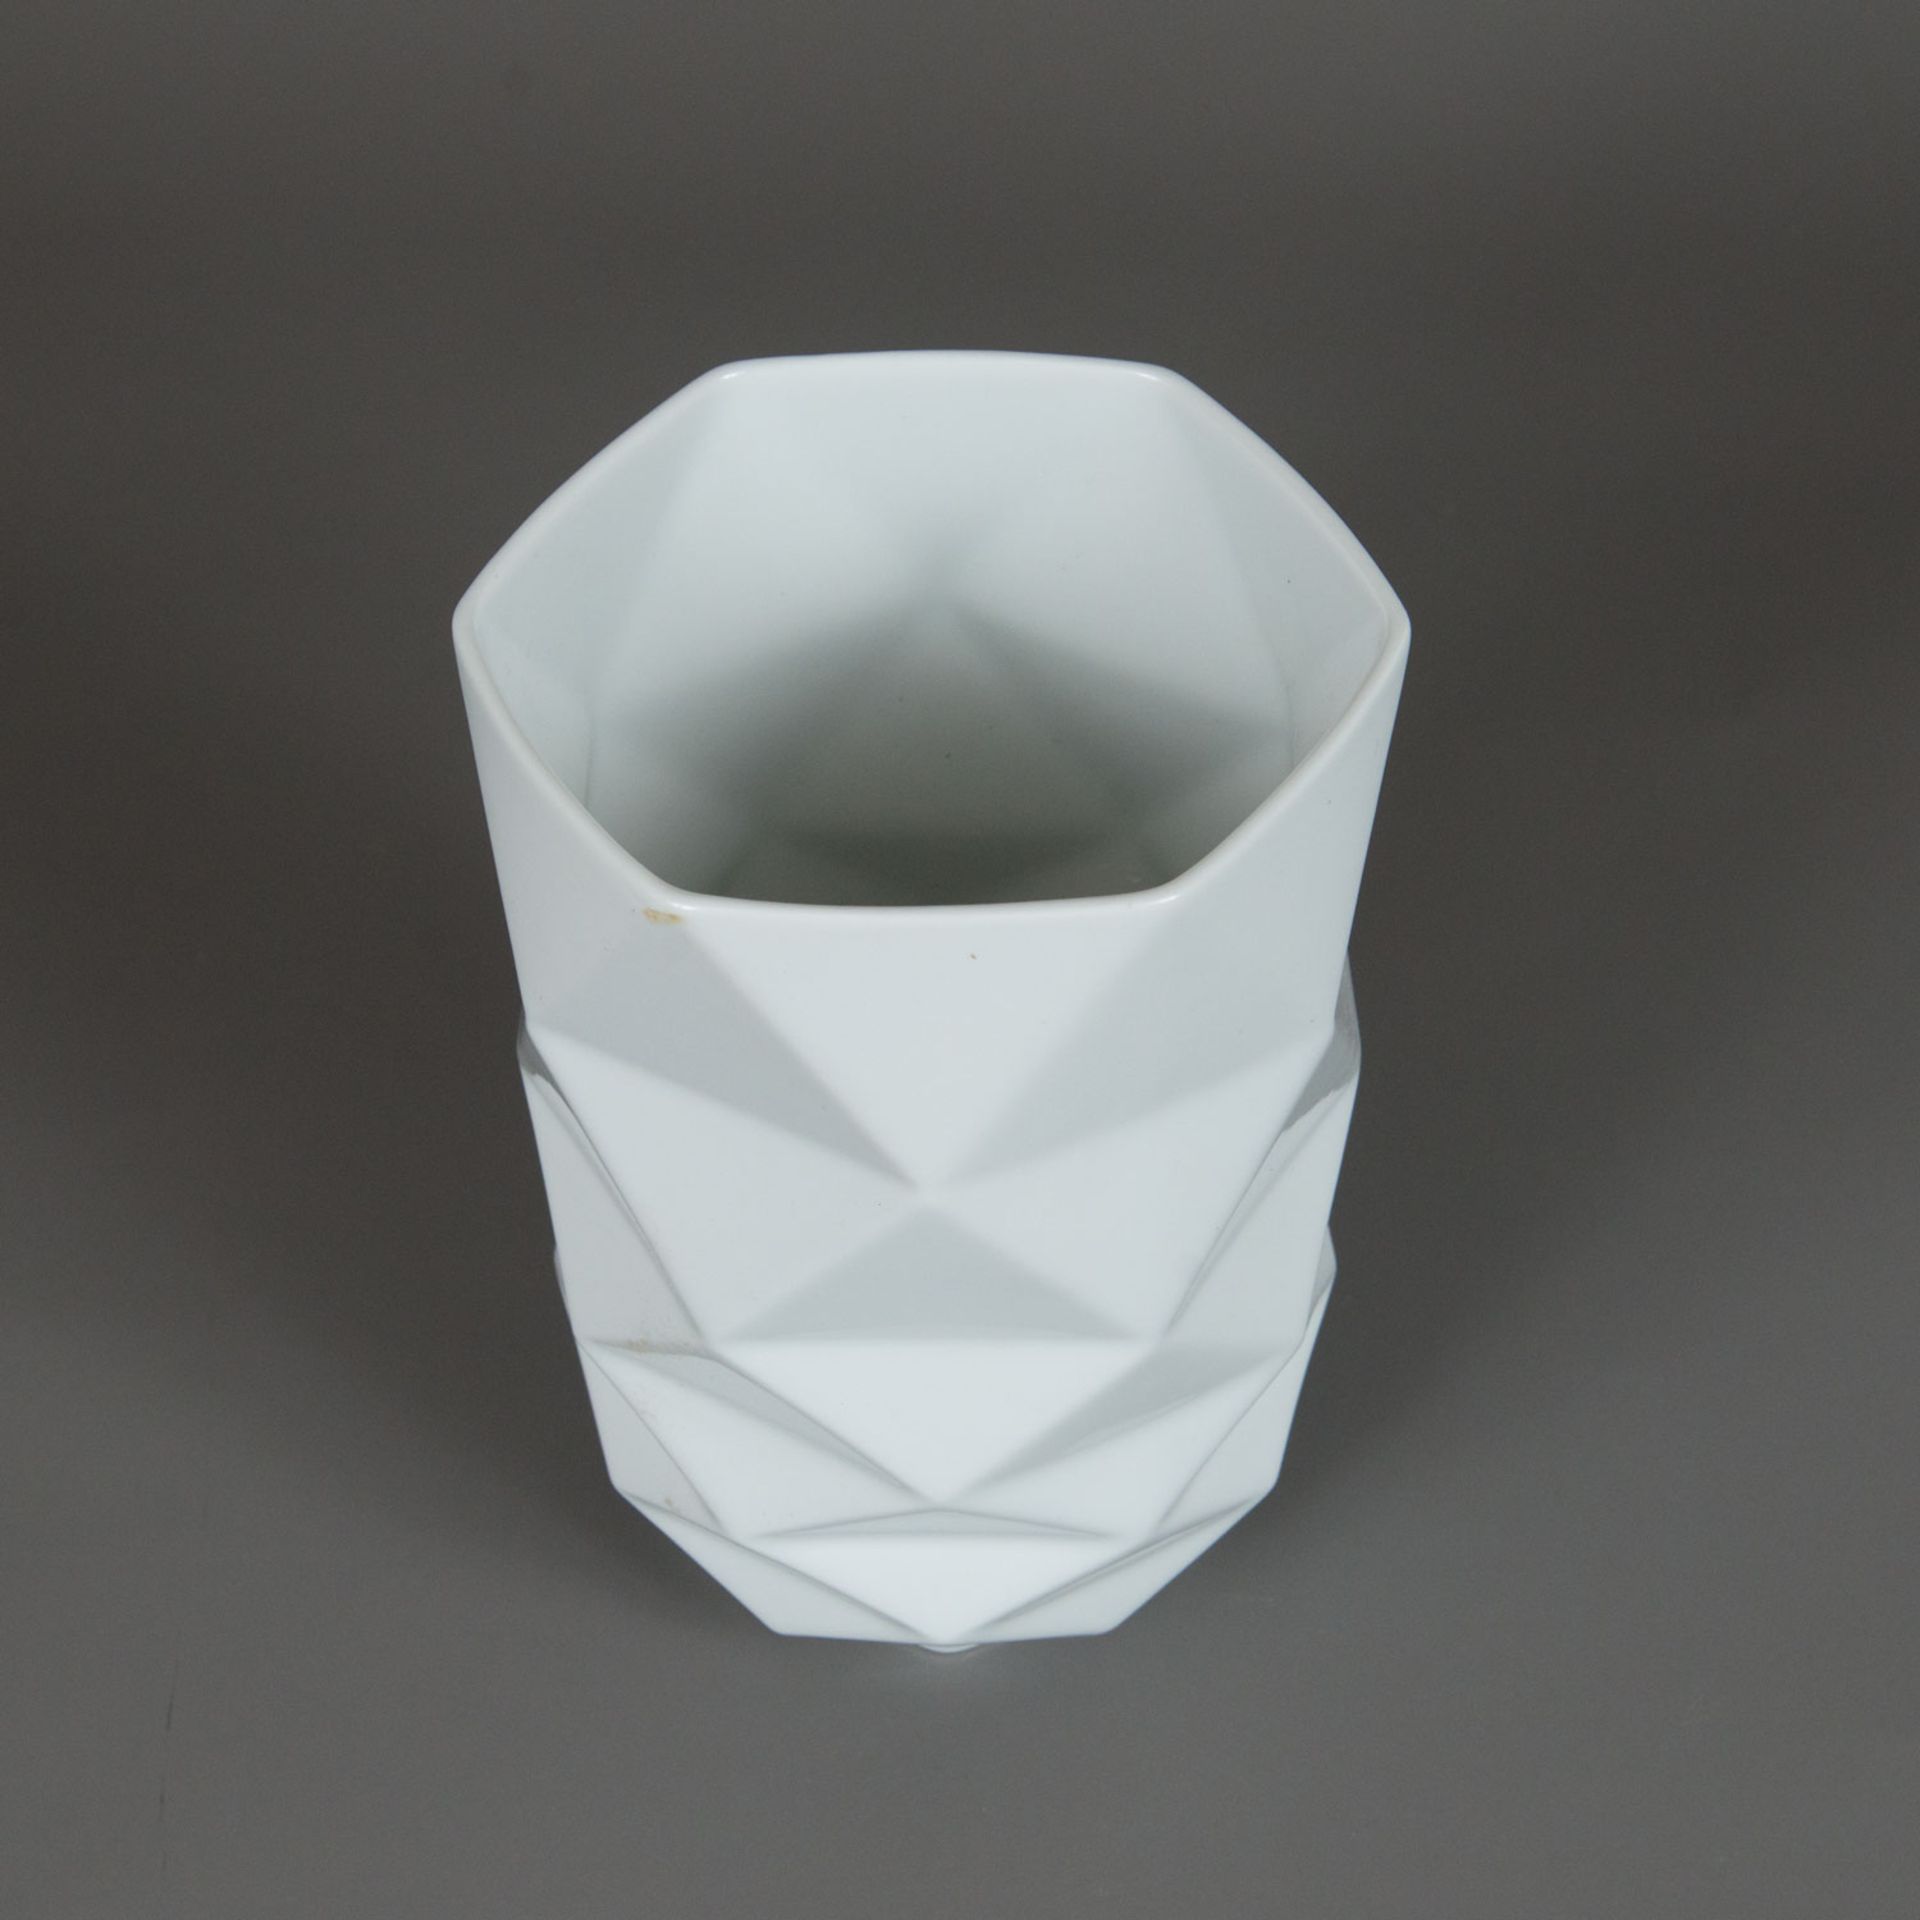 Hutschenreuther Vase - Image 2 of 3